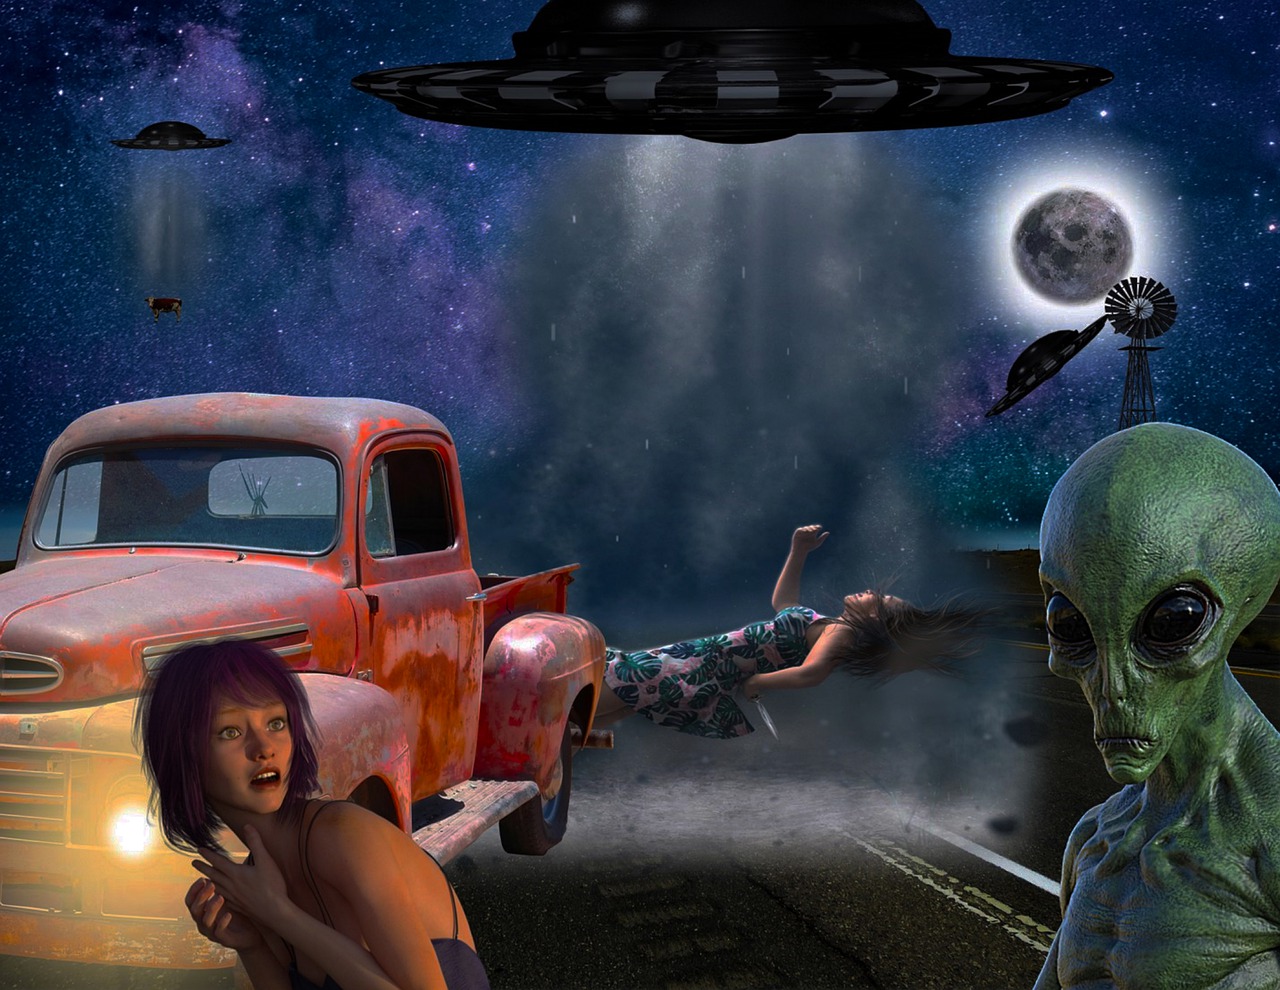 aliens, alien abduction, flying saucers